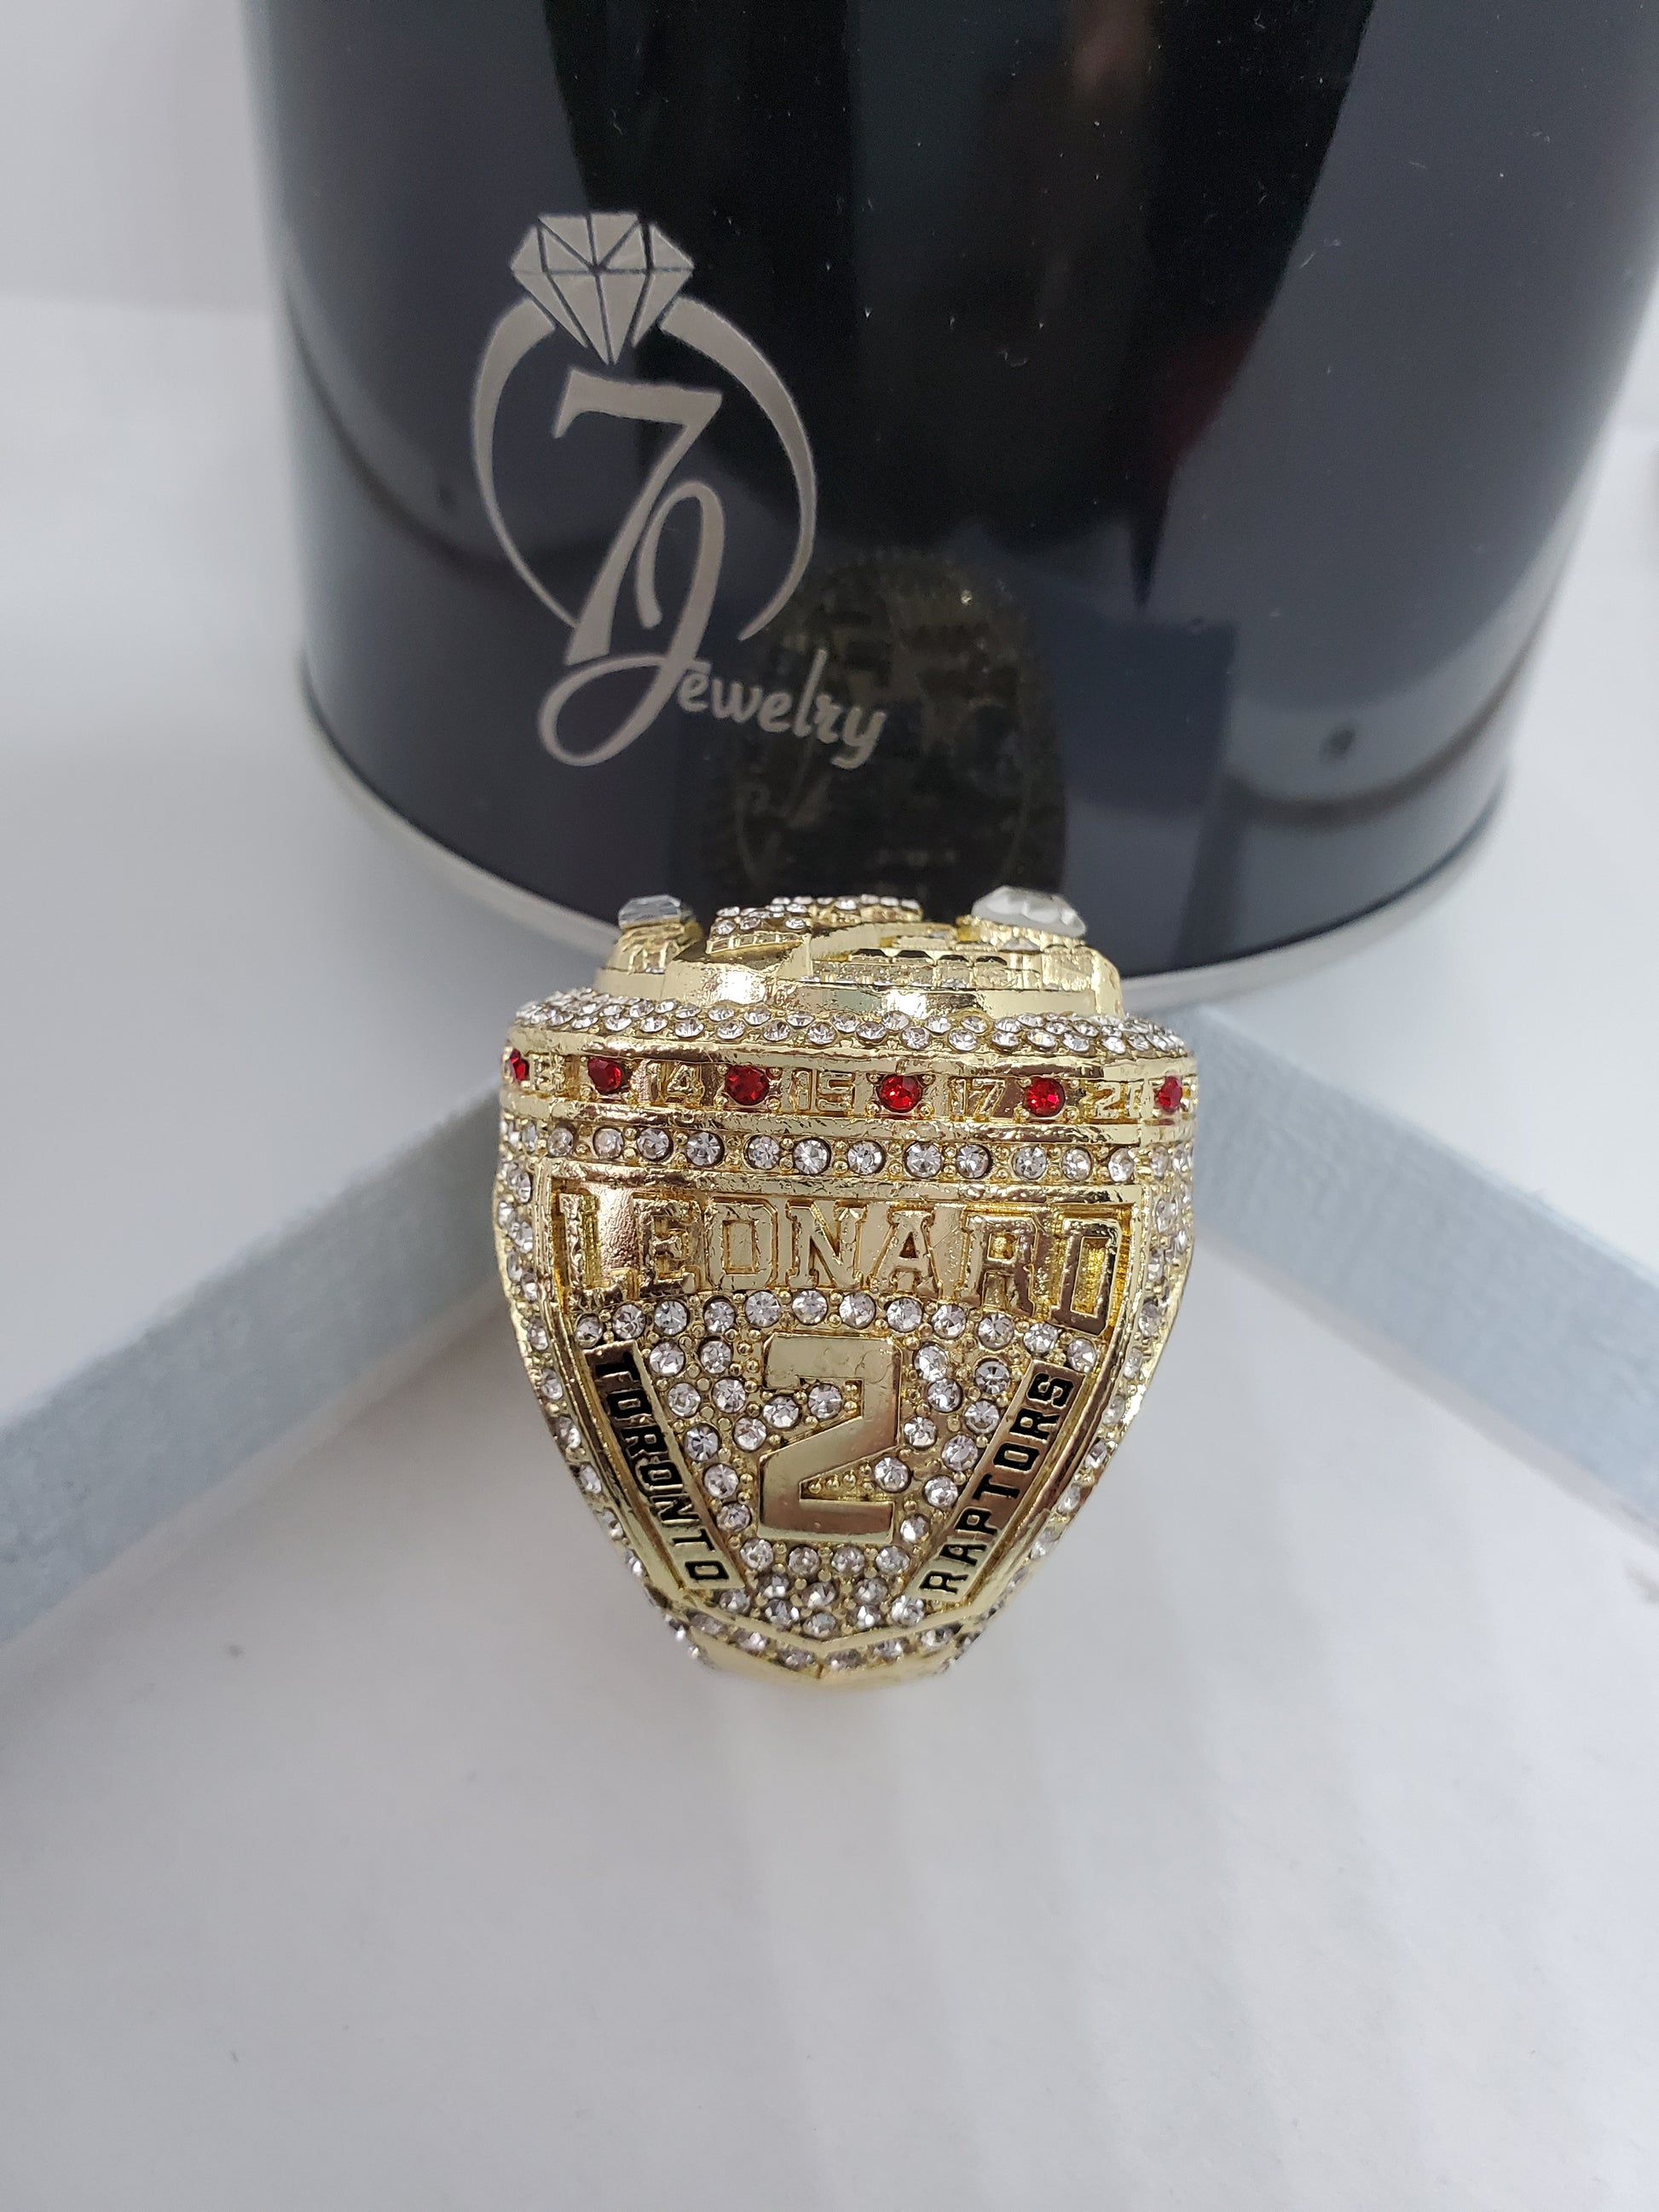 Raptors 2019 Championship Ring 💥Limited Quantity💥 - 7Jewelry